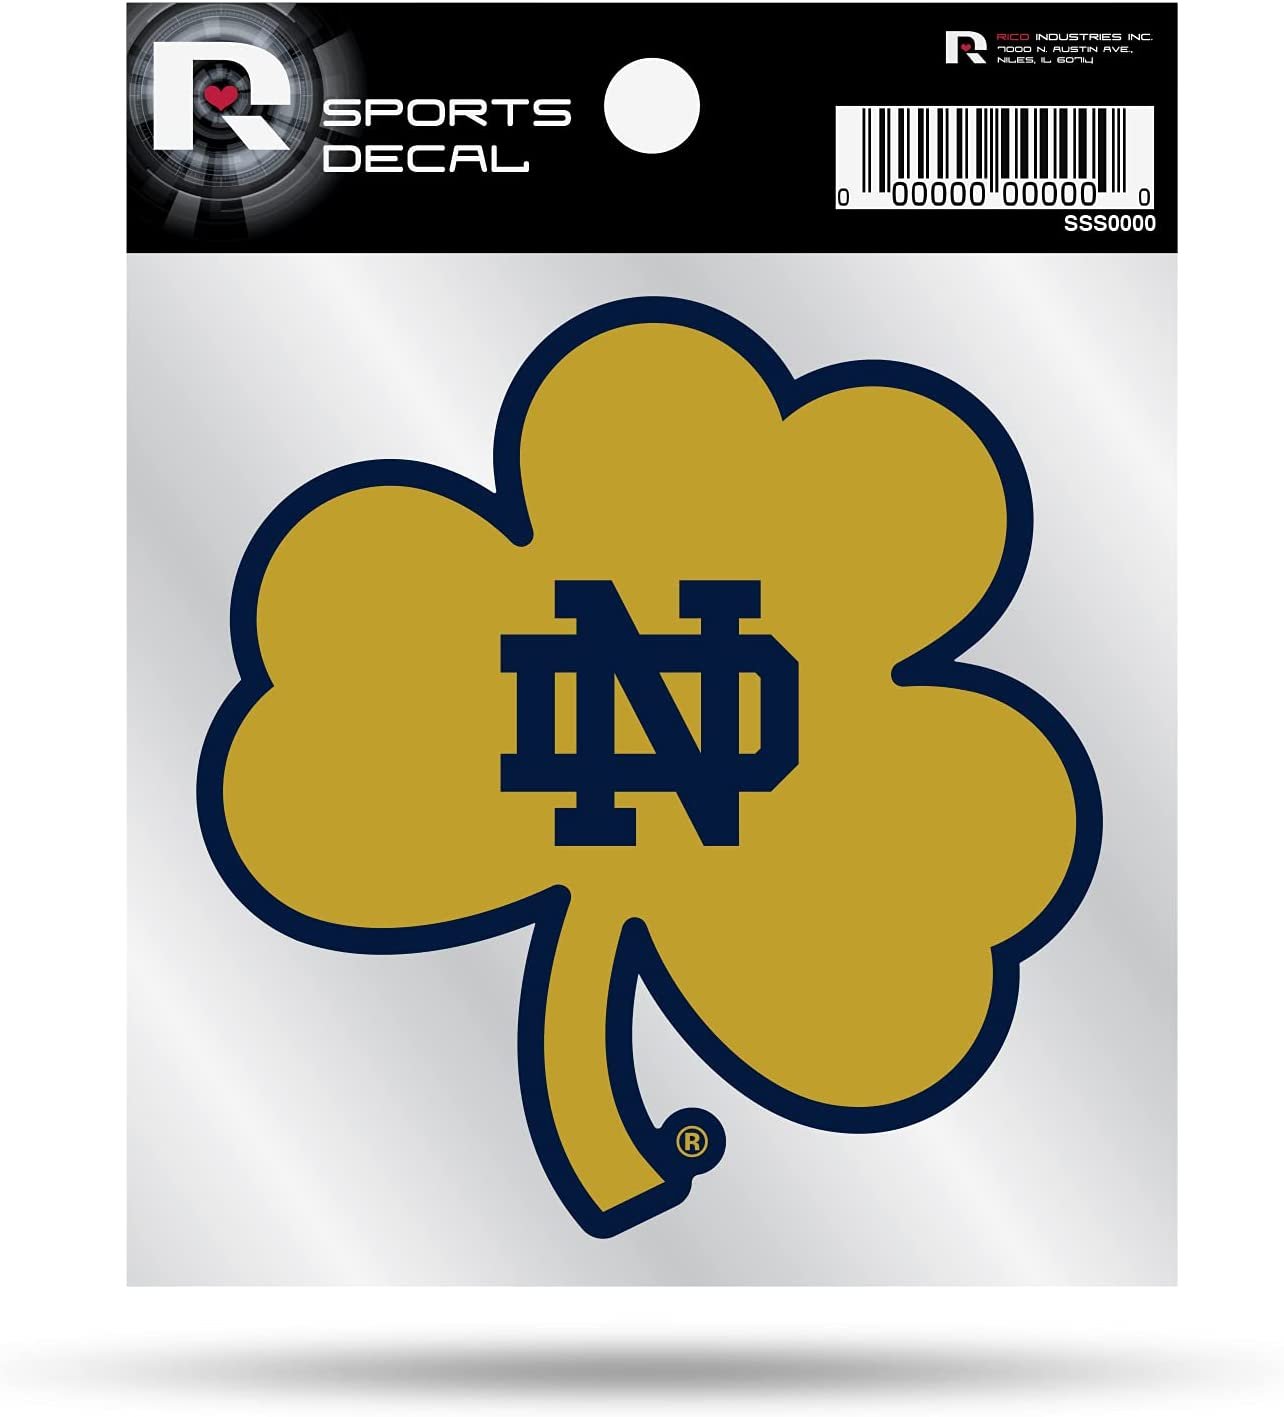 University of Notre Dame Fighting Irish 4x4 Inch Decal Sticker Gold Shamrock Design Clear Backing